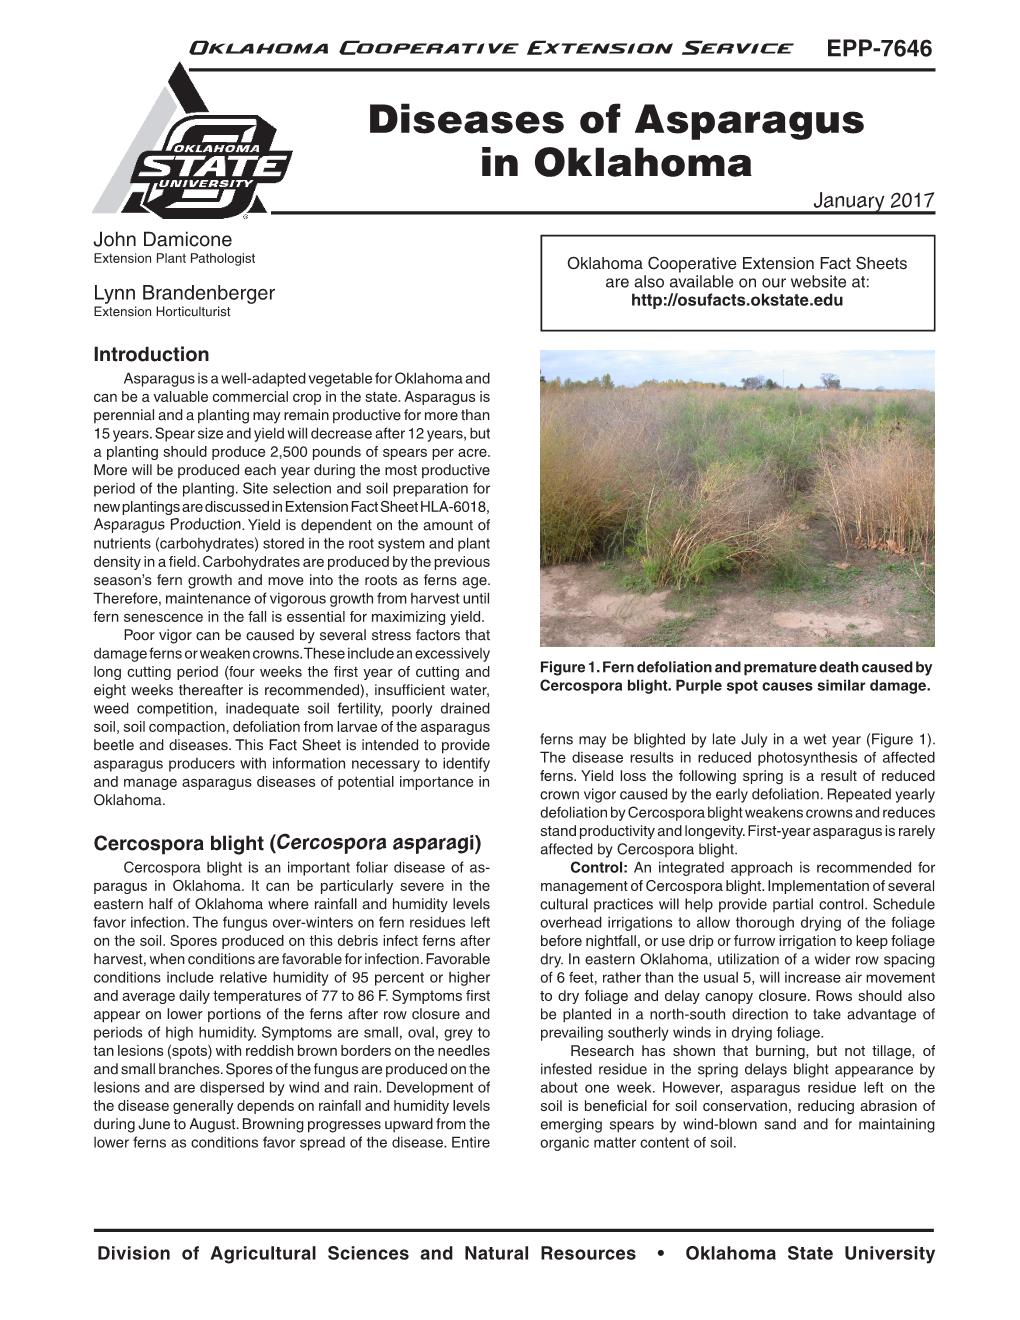 Diseases of Asparagus in Oklahoma